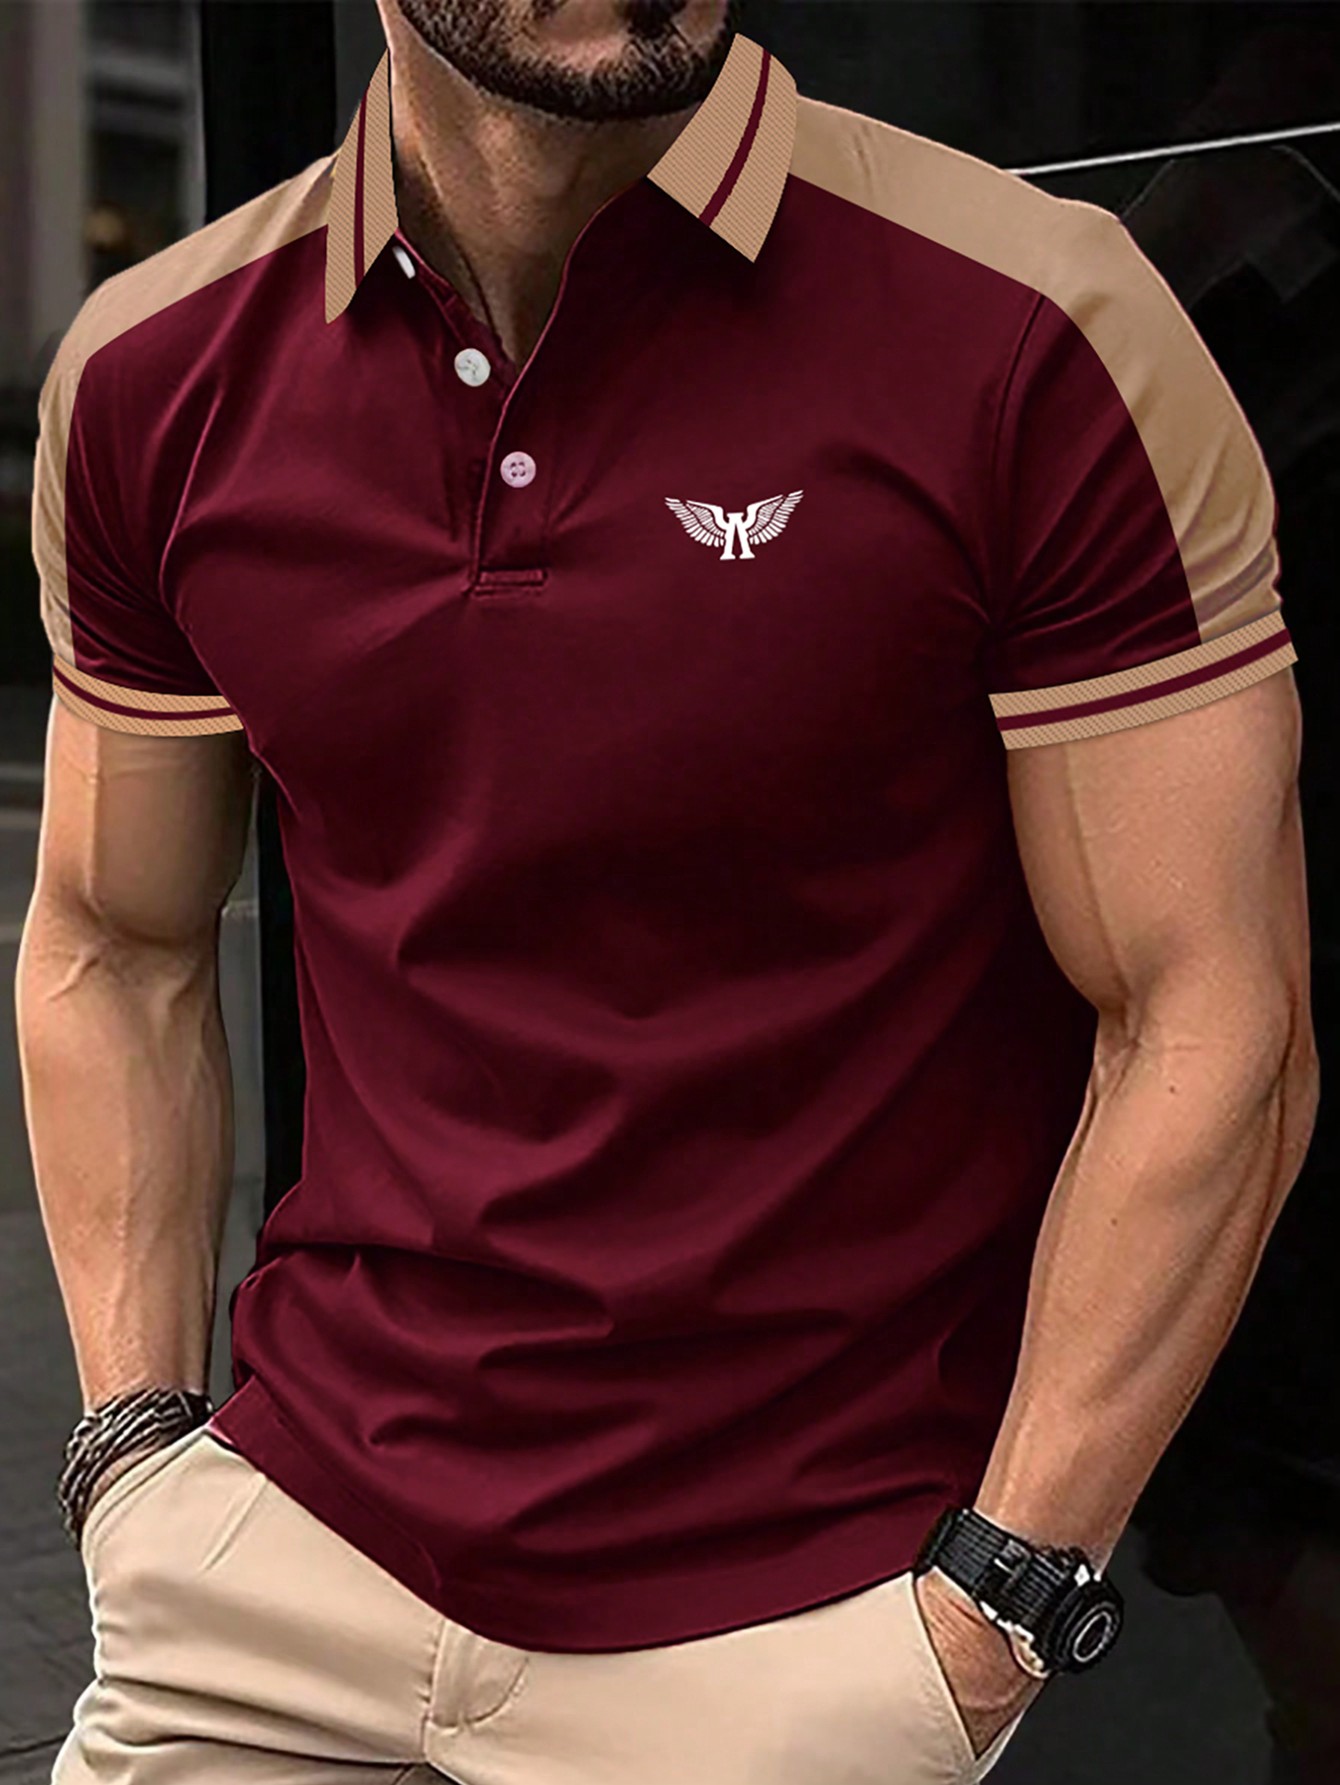 Мужская рубашка-поло с короткими рукавами и пуговицами на пуговицах Manfinity Homme контрастного цвета, бургундия мужская рубашка поло контрастного цвета manfinity homme хаки